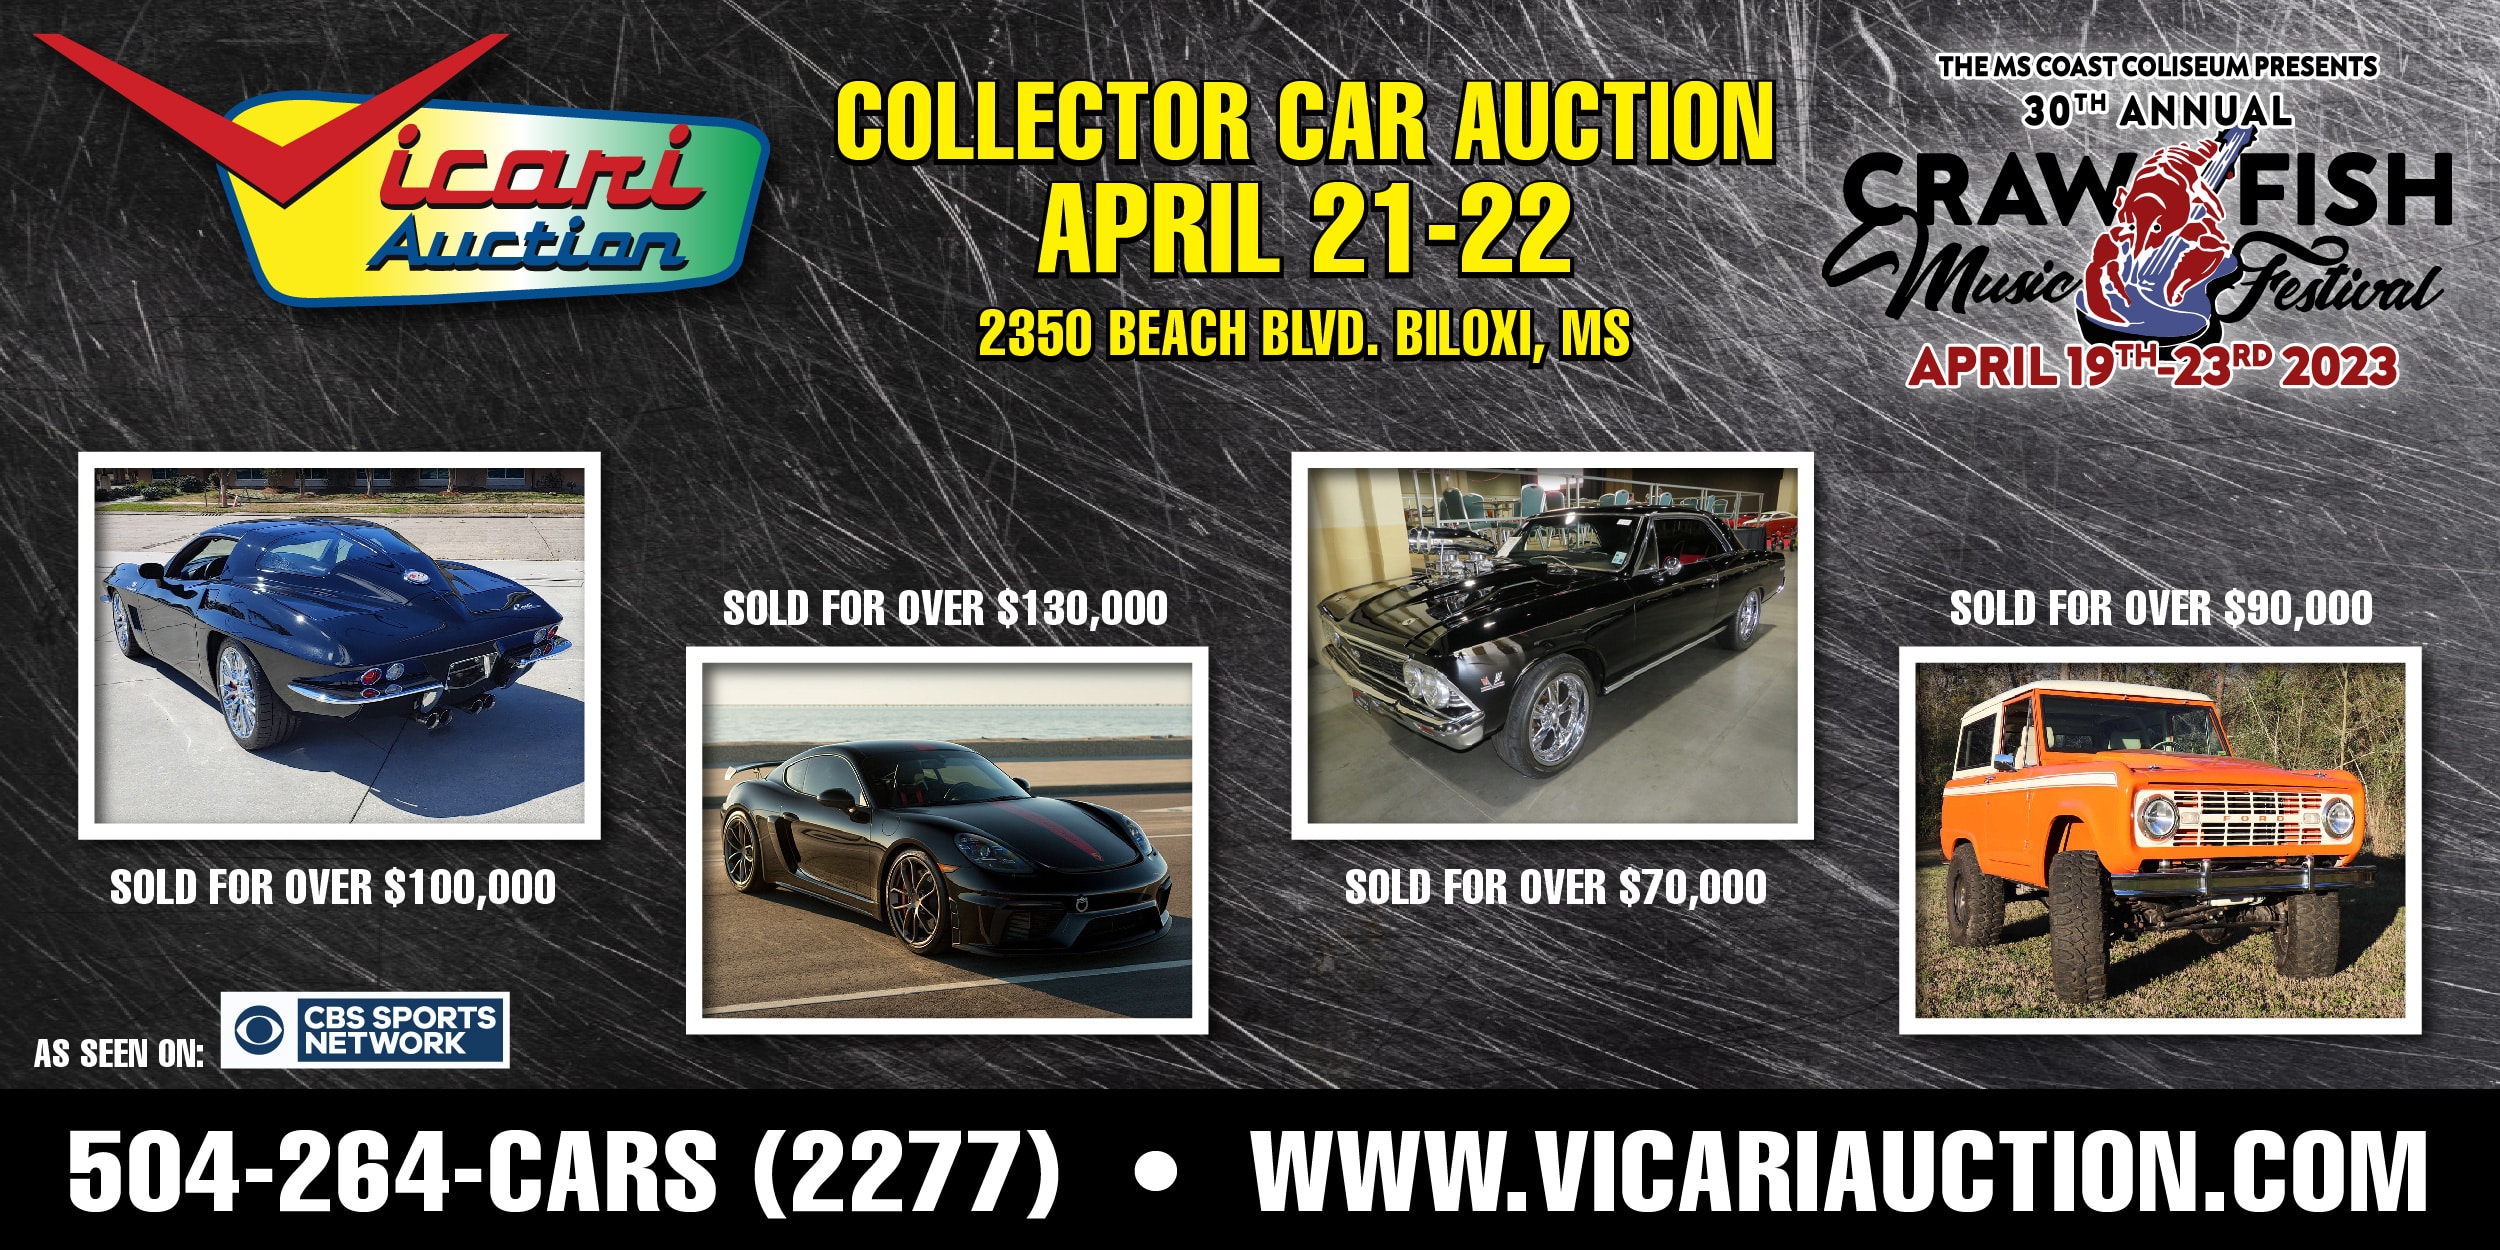 Vicari Collector Car Auction in Biloxi during the Crawfish Music